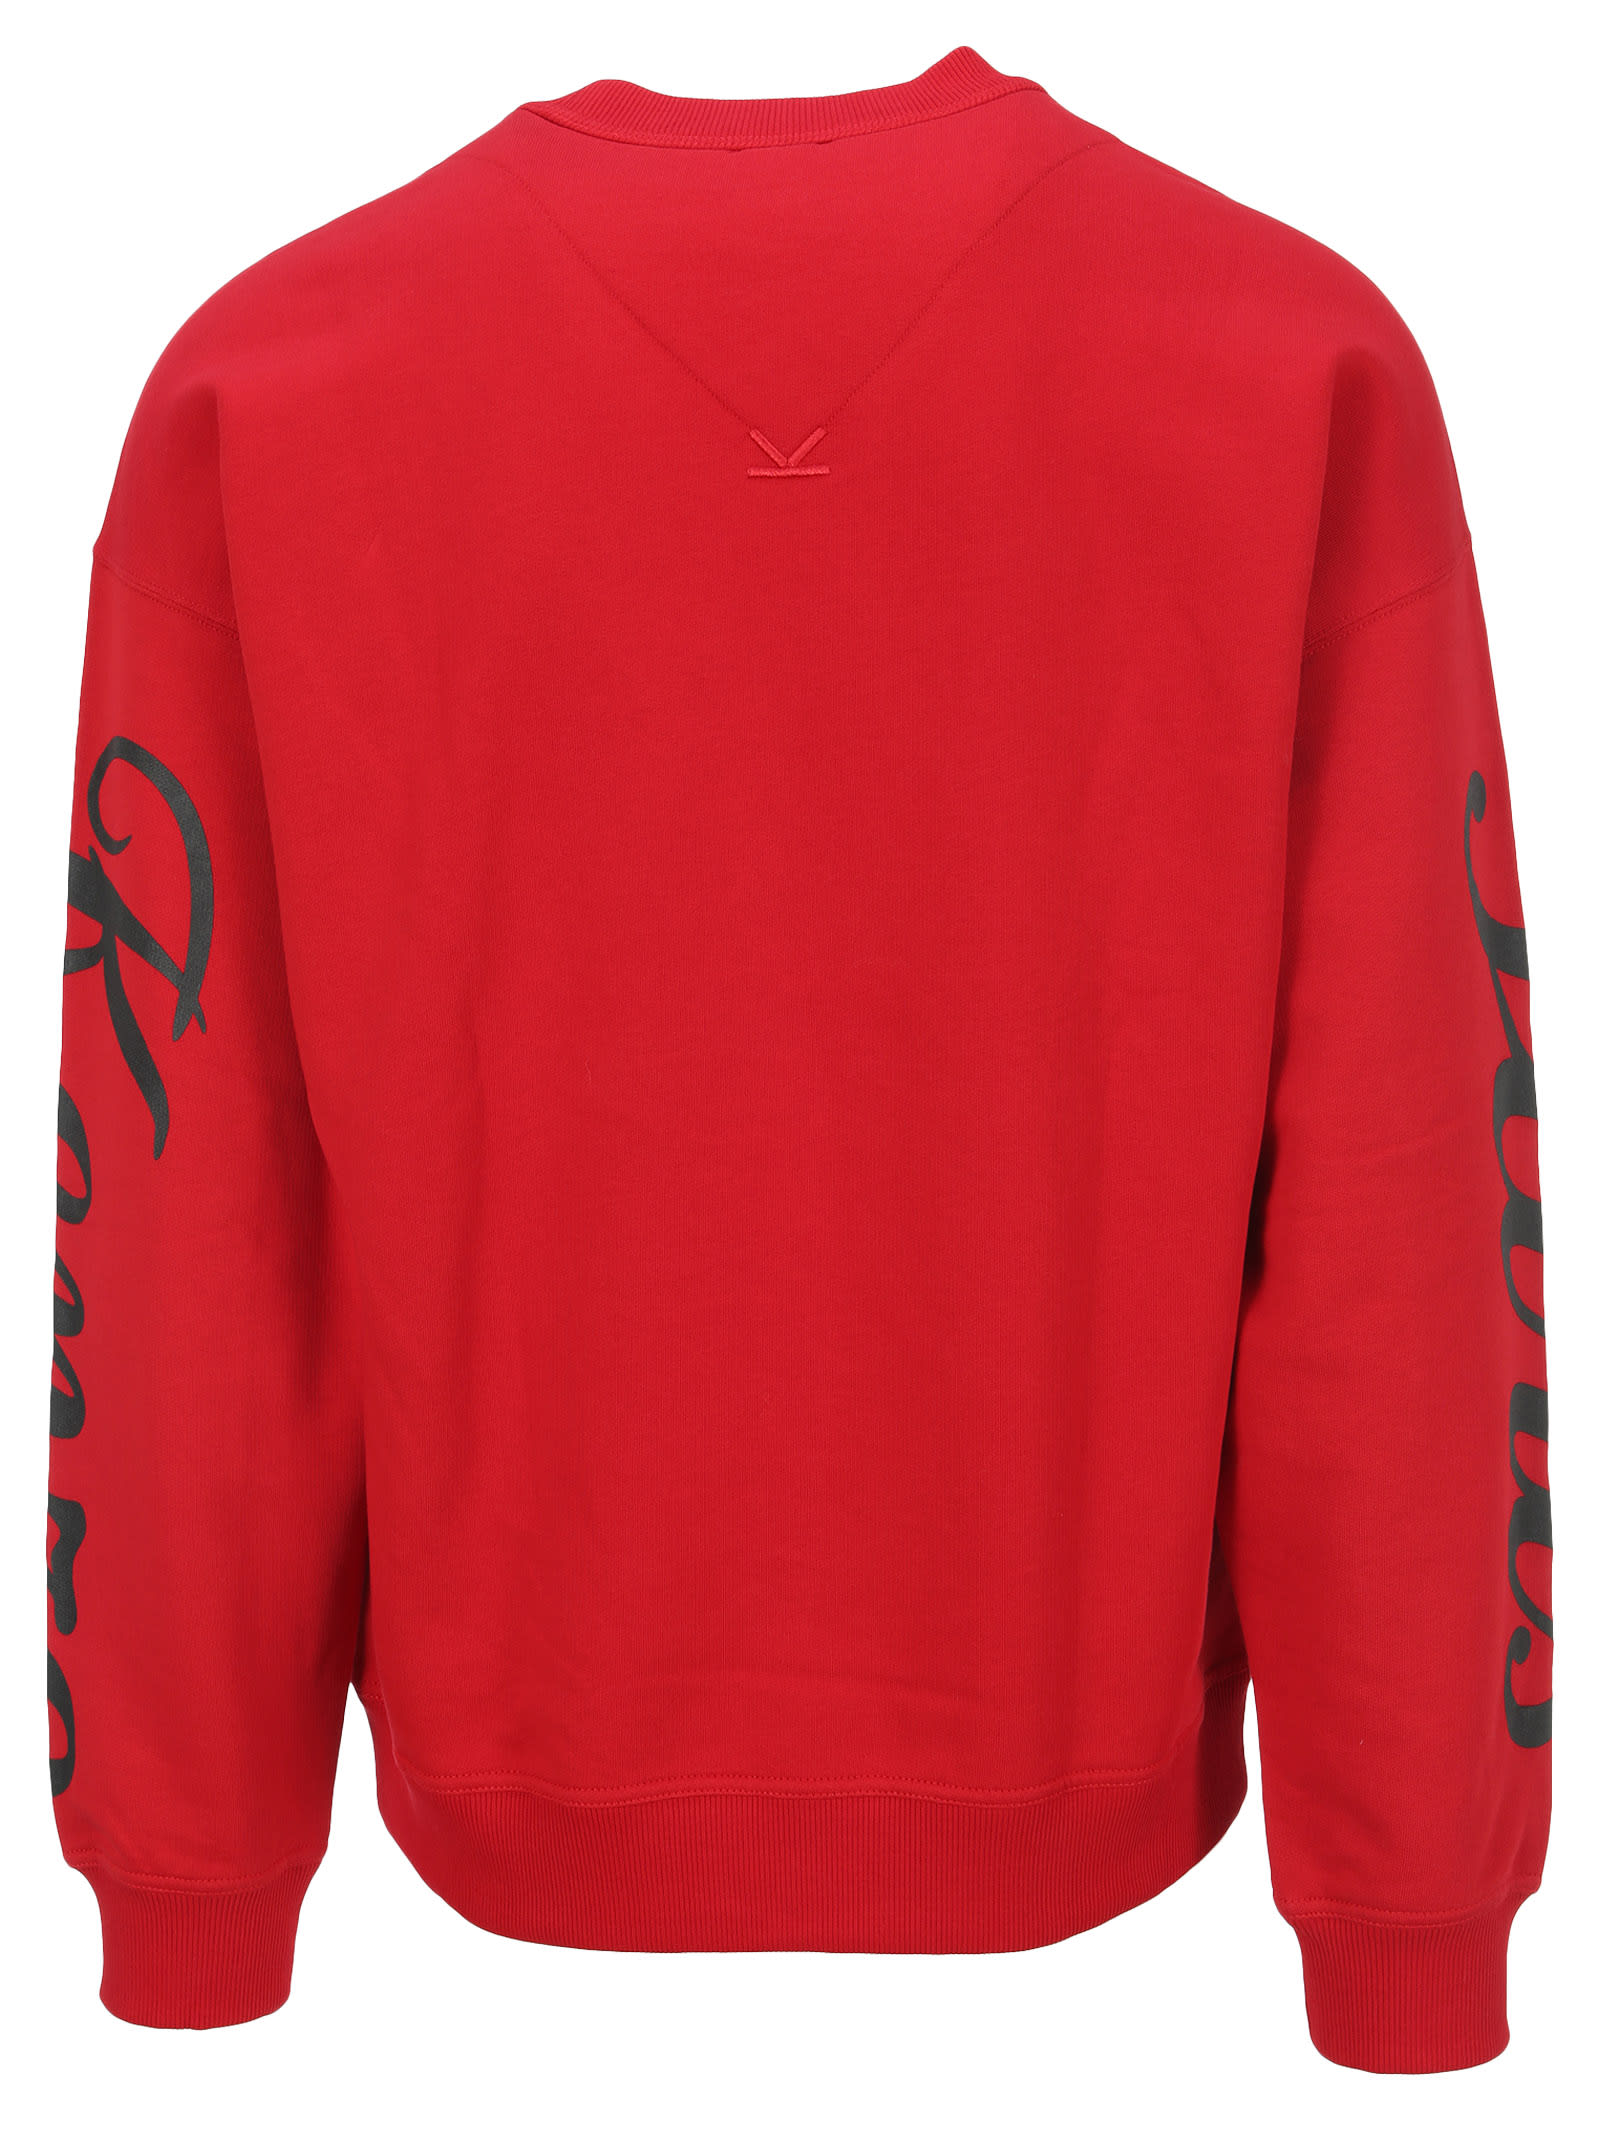 kenzo sweater red